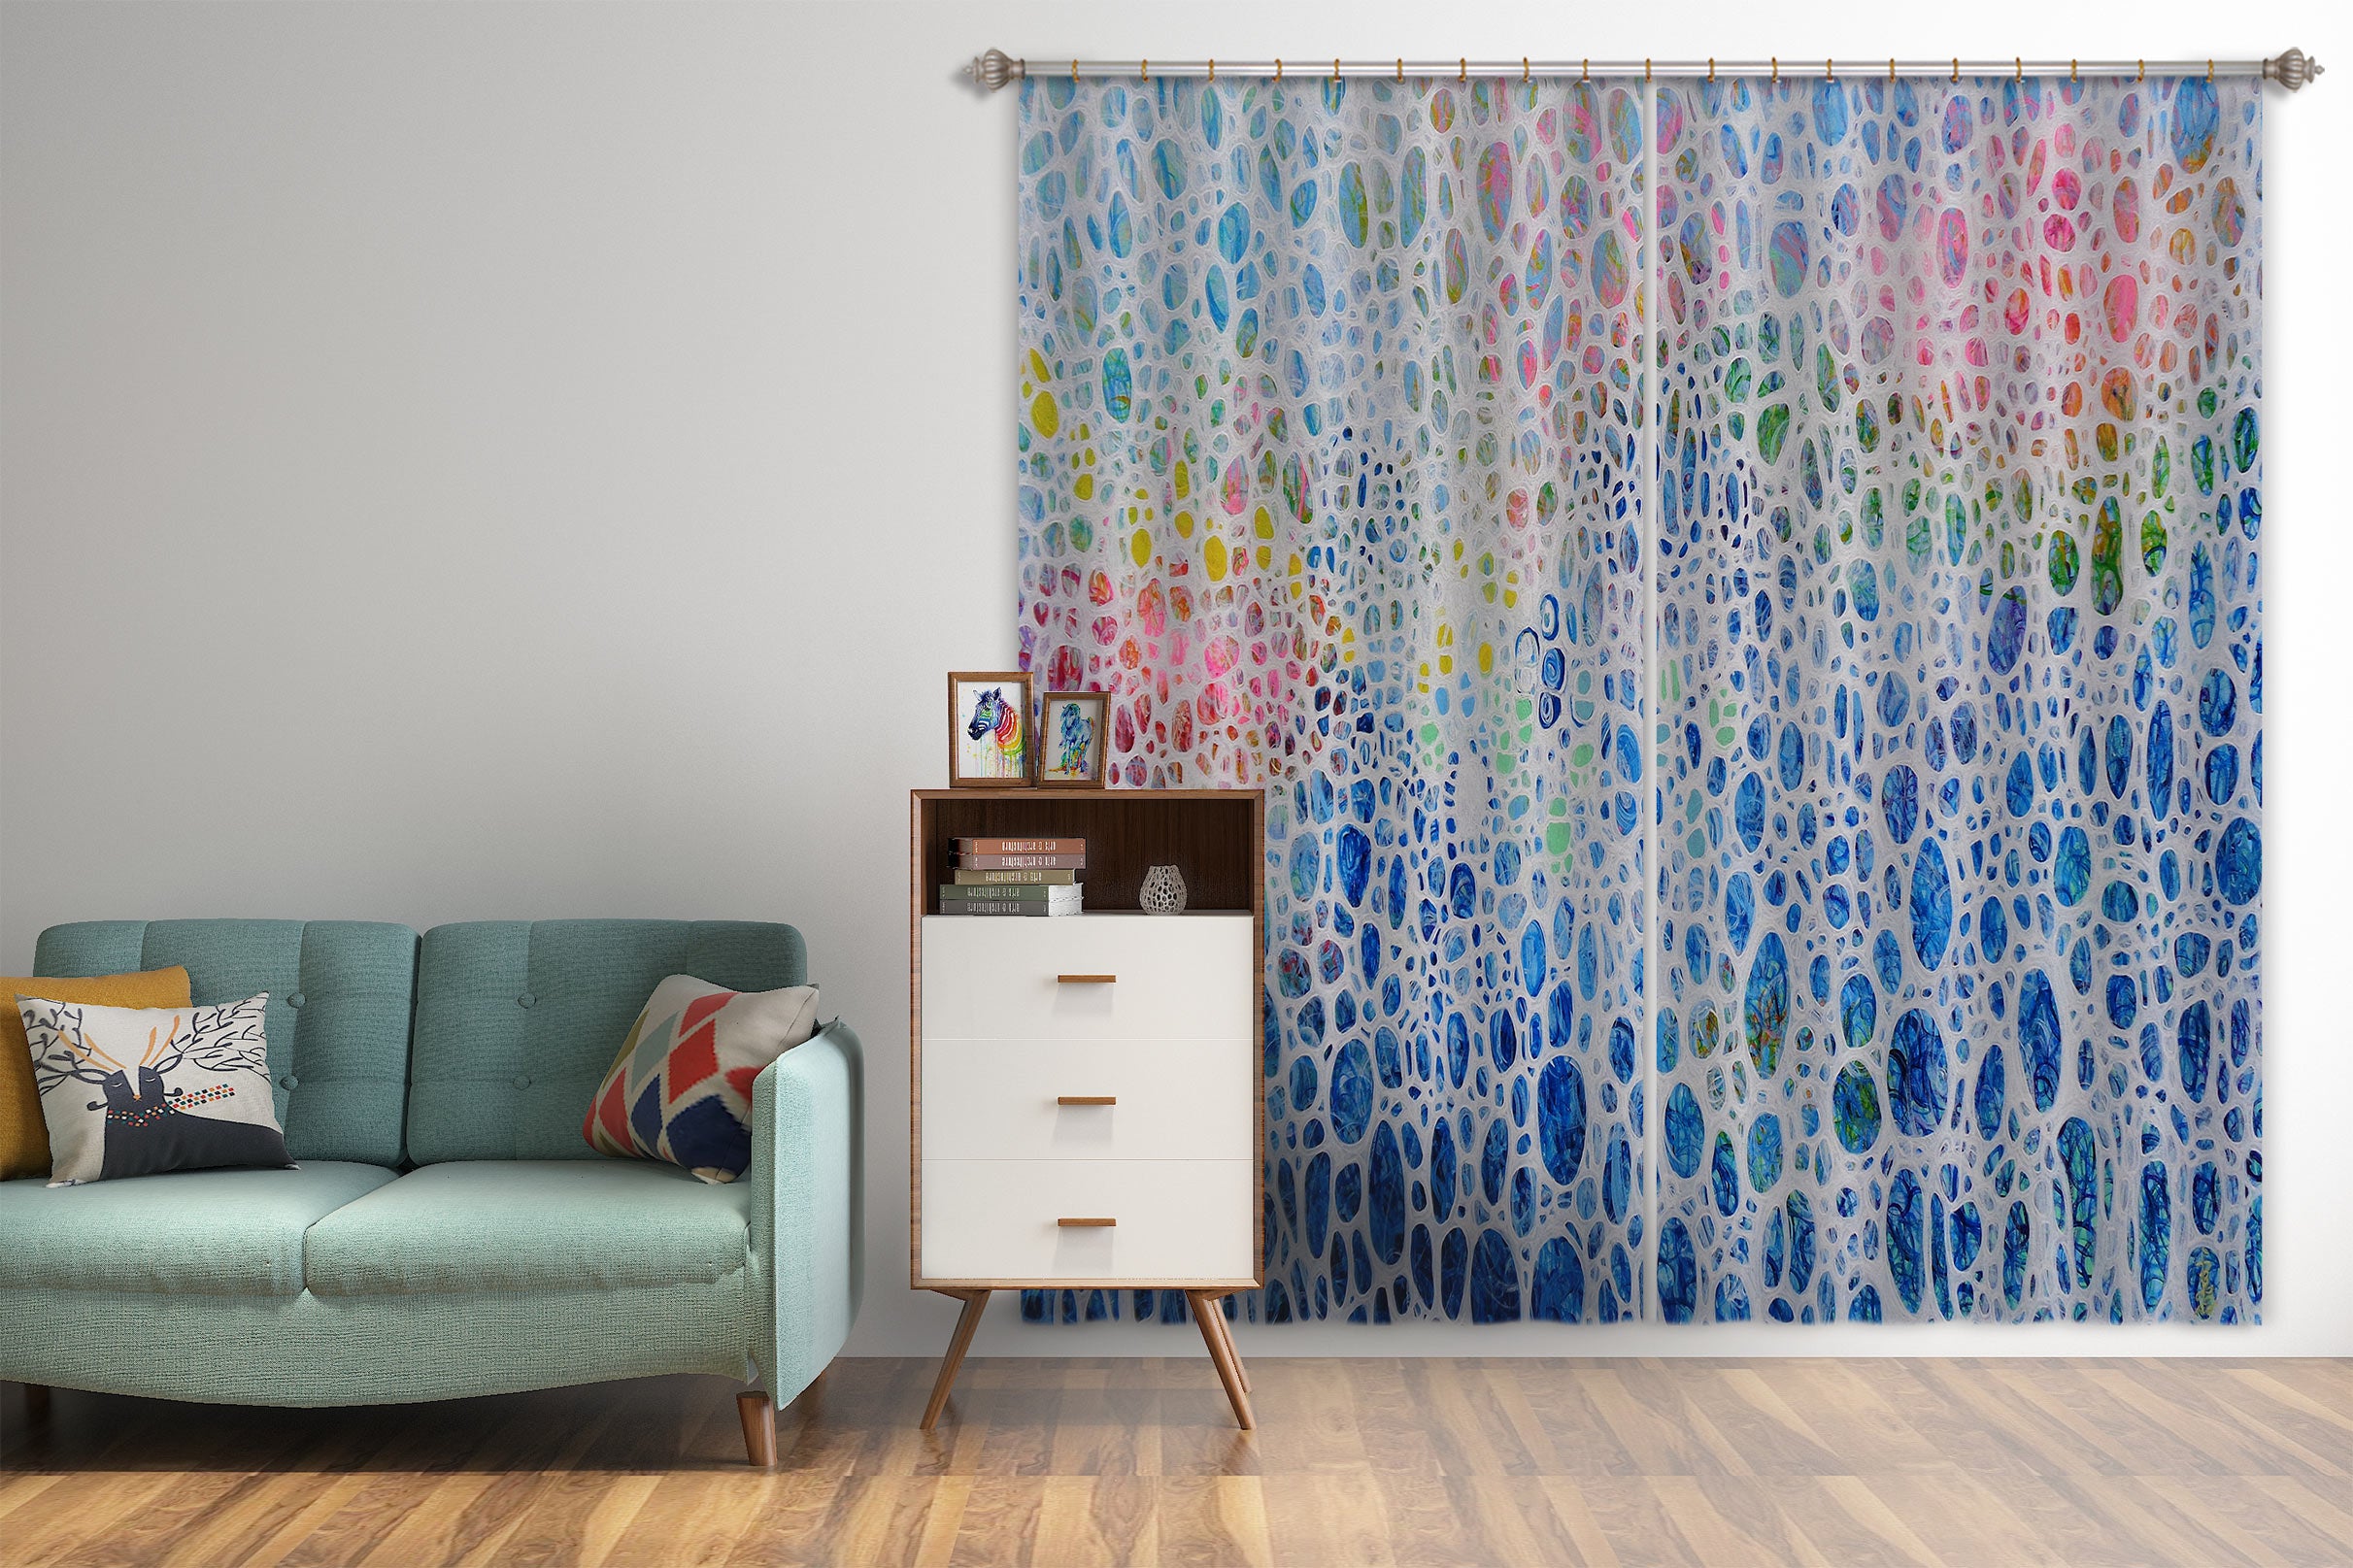 3D Blue Texture 2407 Misako Chida Curtain Curtains Drapes